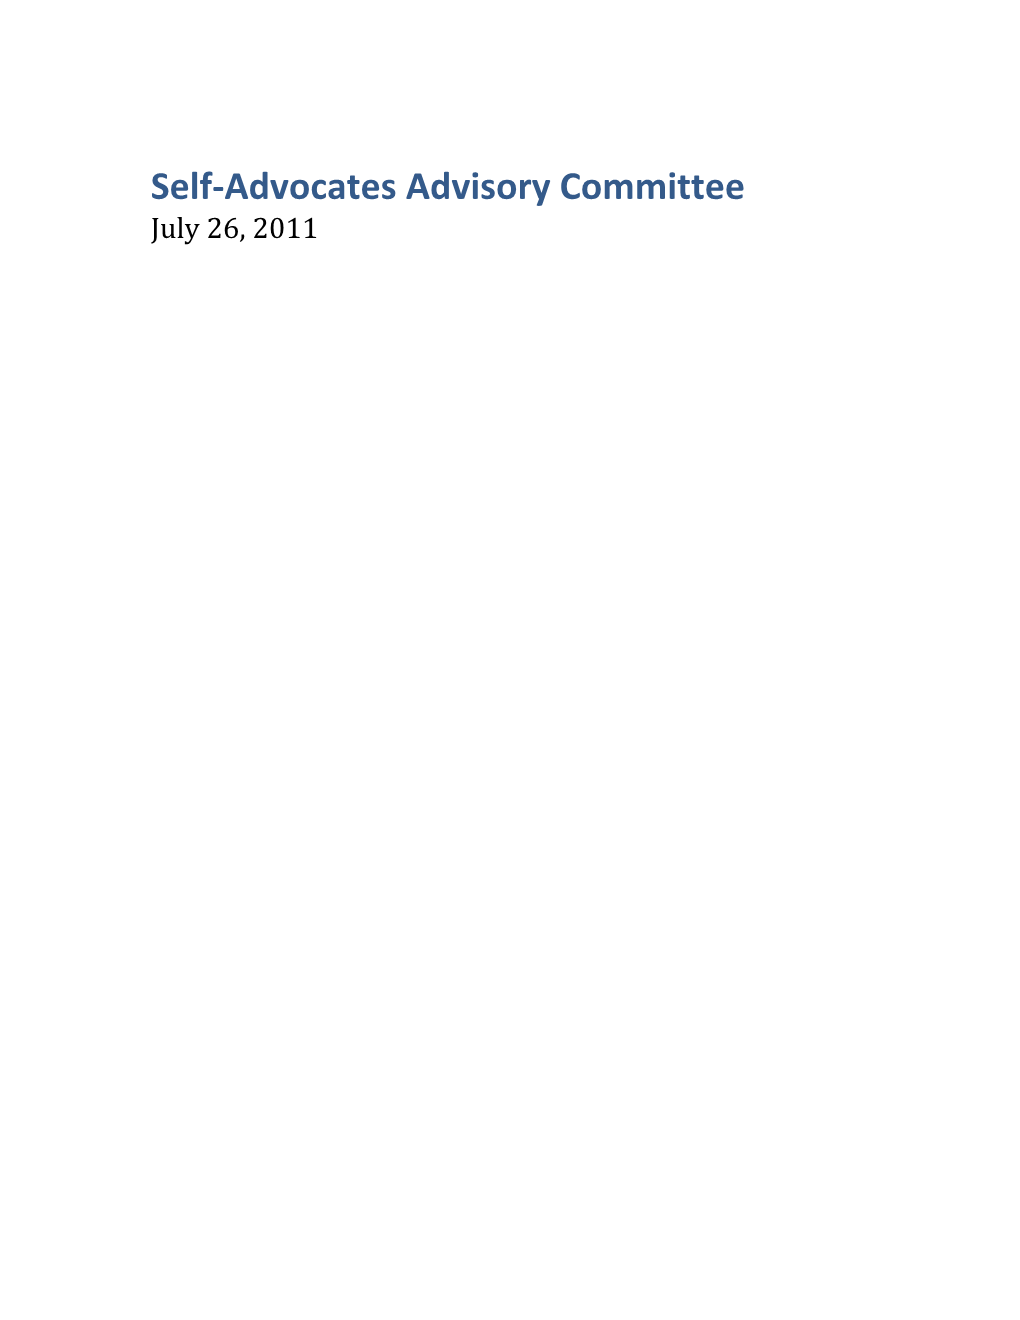 Self-Advocates Advisory Committee Meeting July 2011